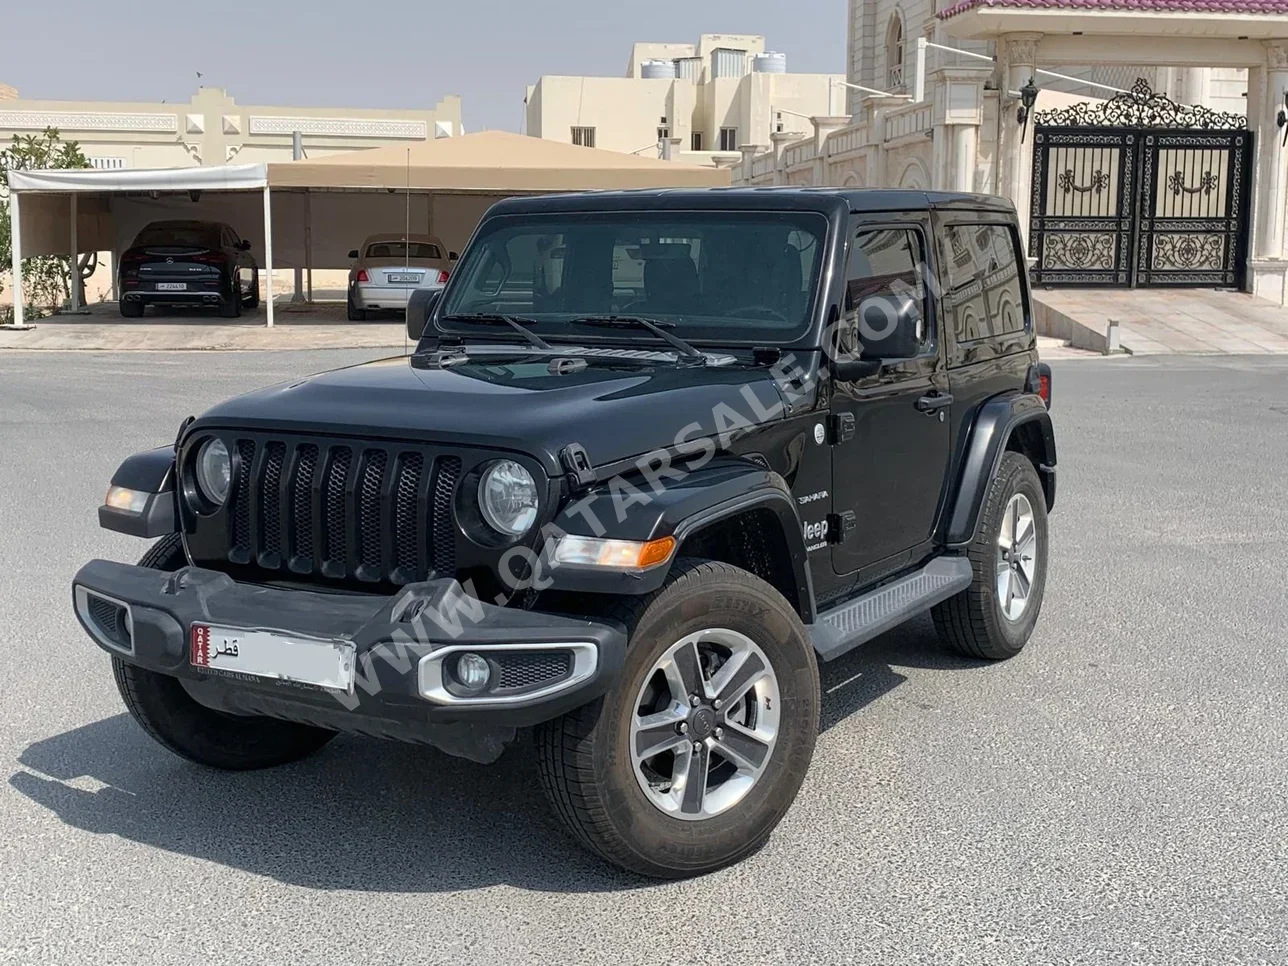 Jeep  Wrangler  Sahara  2018  Automatic  102,000 Km  6 Cylinder  Four Wheel Drive (4WD)  SUV  Black